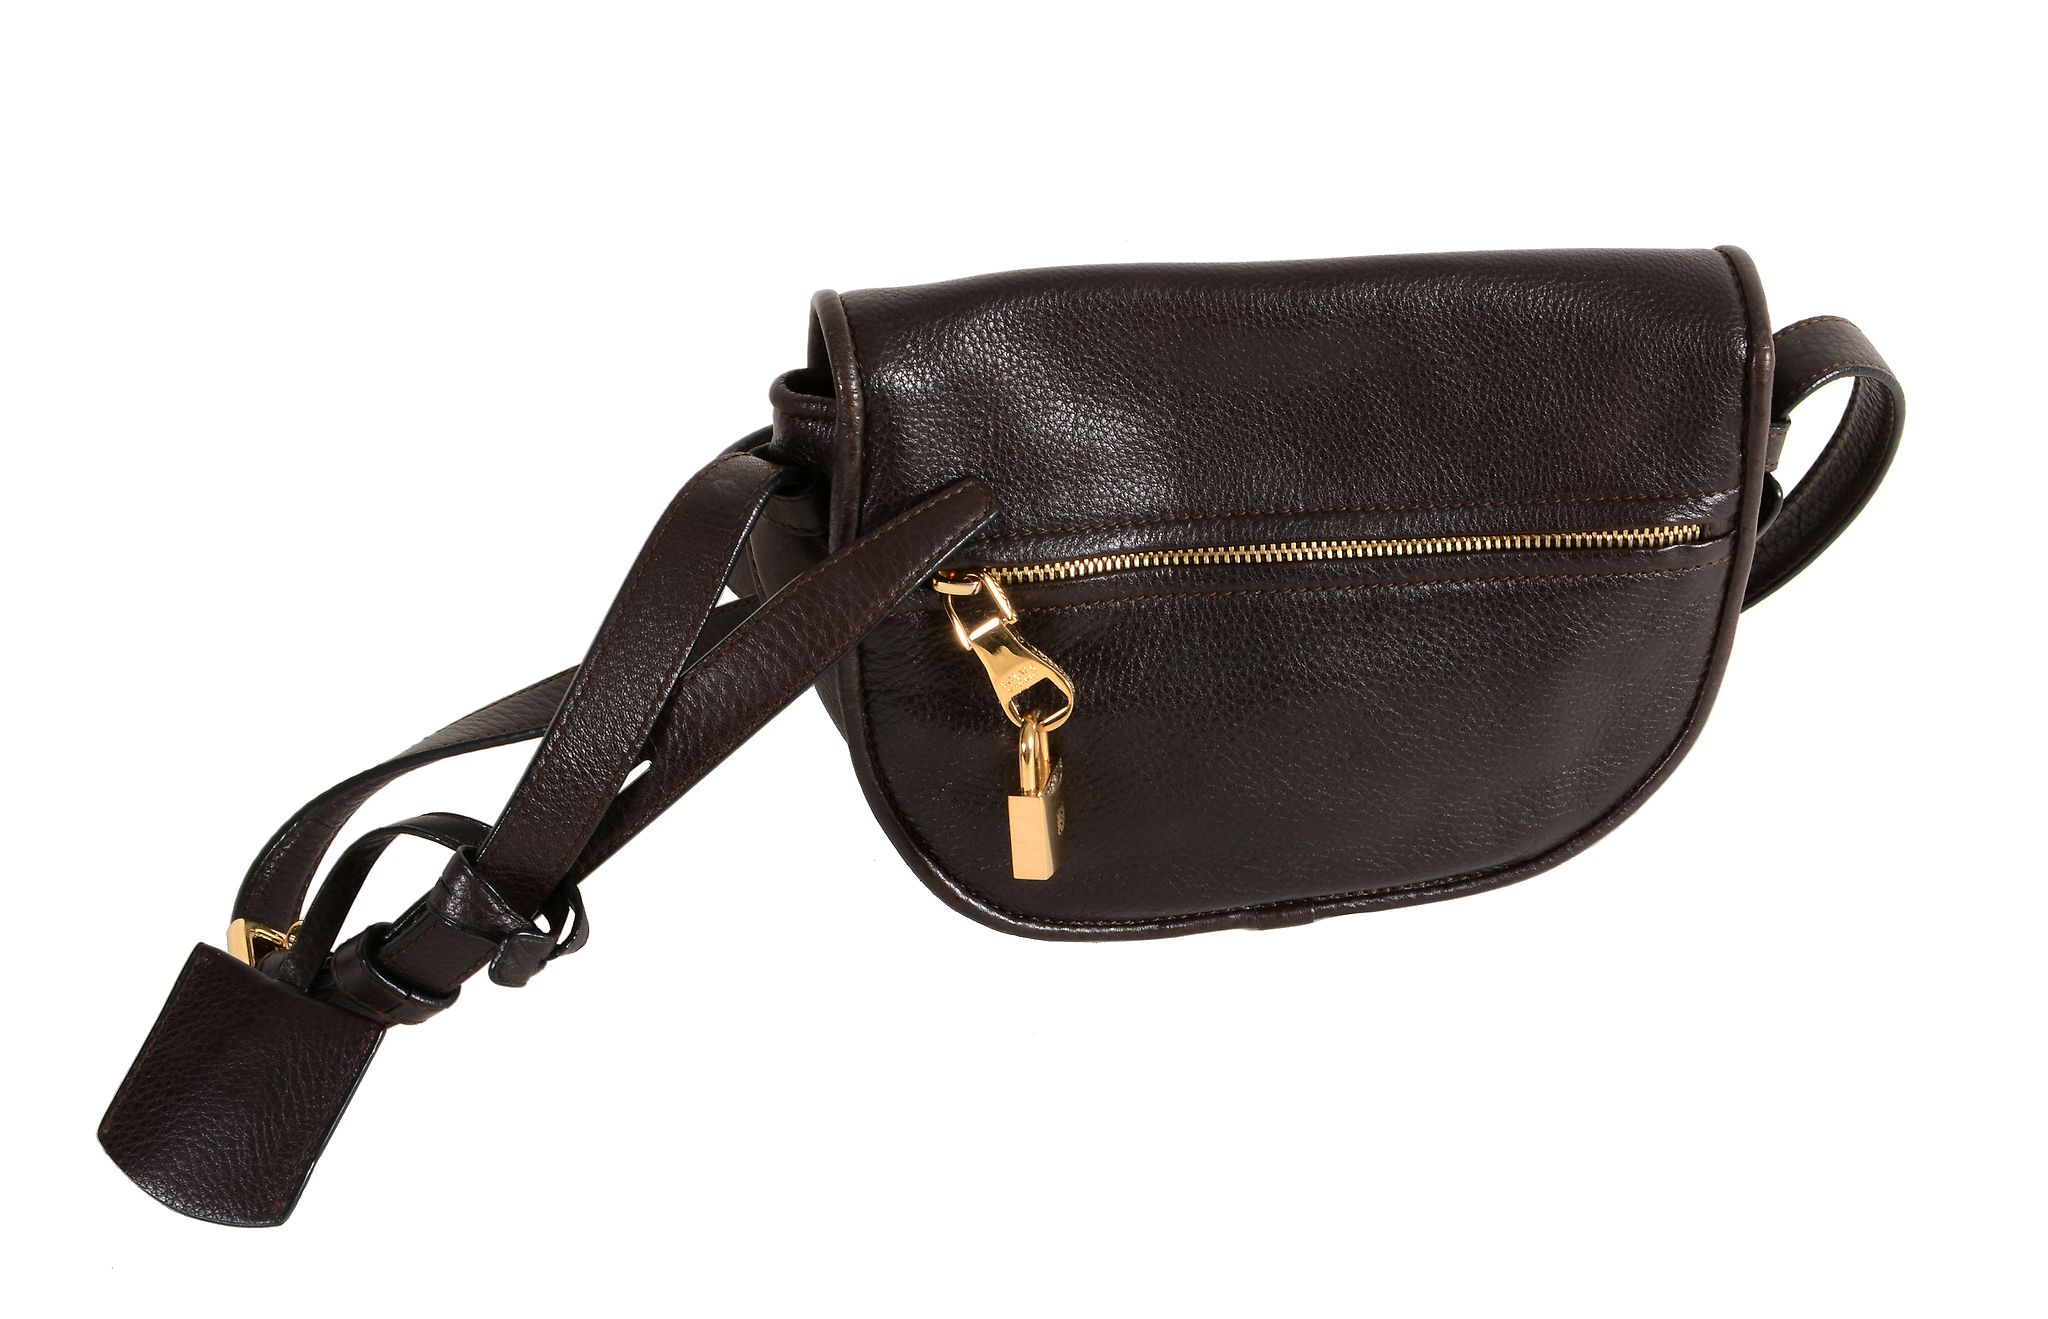 Michael Kors, Berkley, a tan leather clutch bag  Michael Kors, Berkley, a tan leather clutch - Image 4 of 5